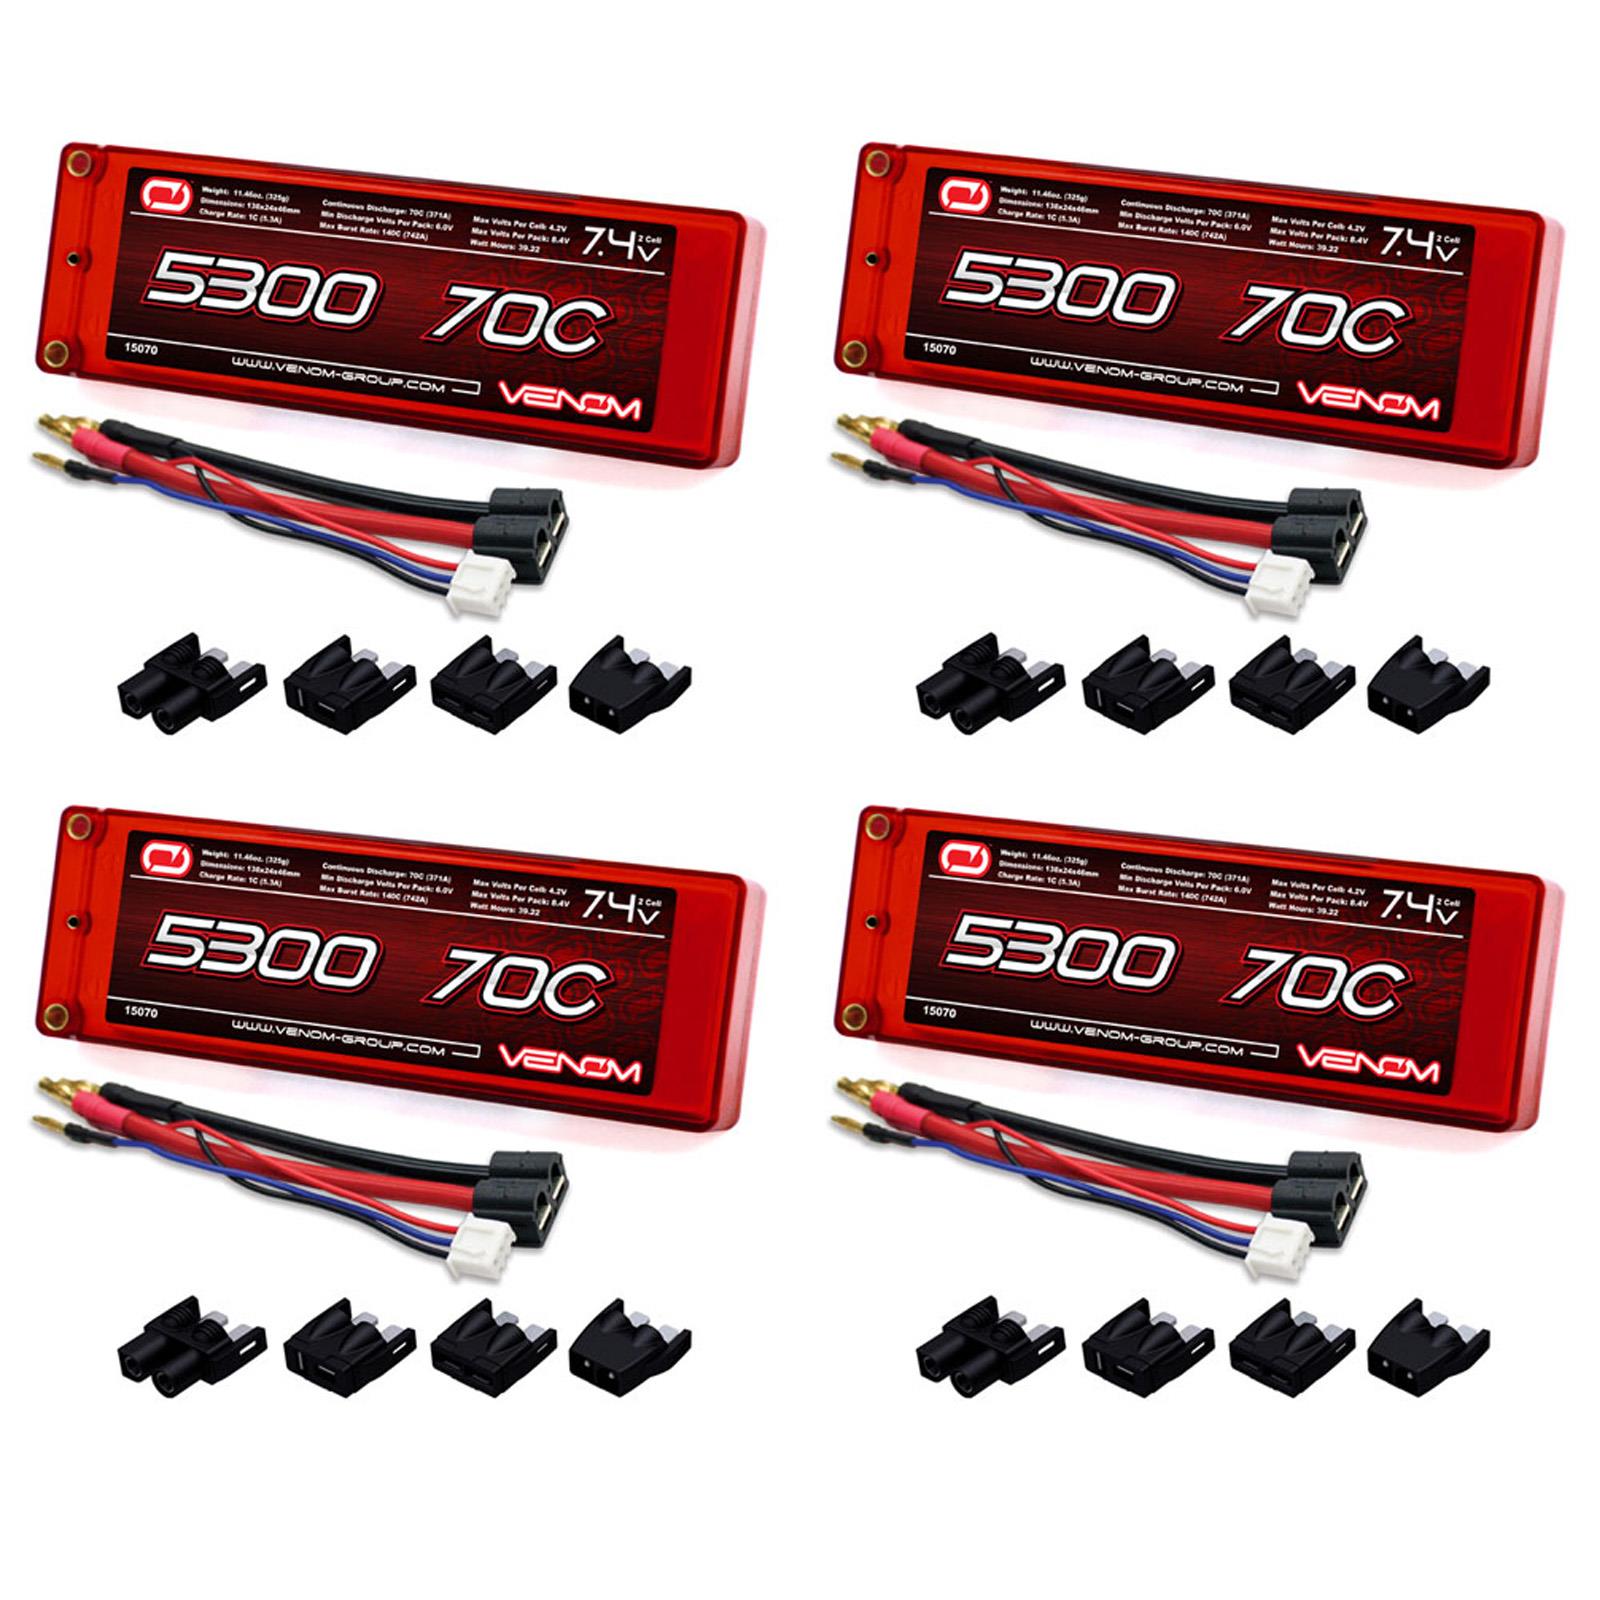 Venom 70C 2S 5300mAh 7.4 Hard Case LiPO Battery with UNI Plug x4 Packs | Part No. 15070X4